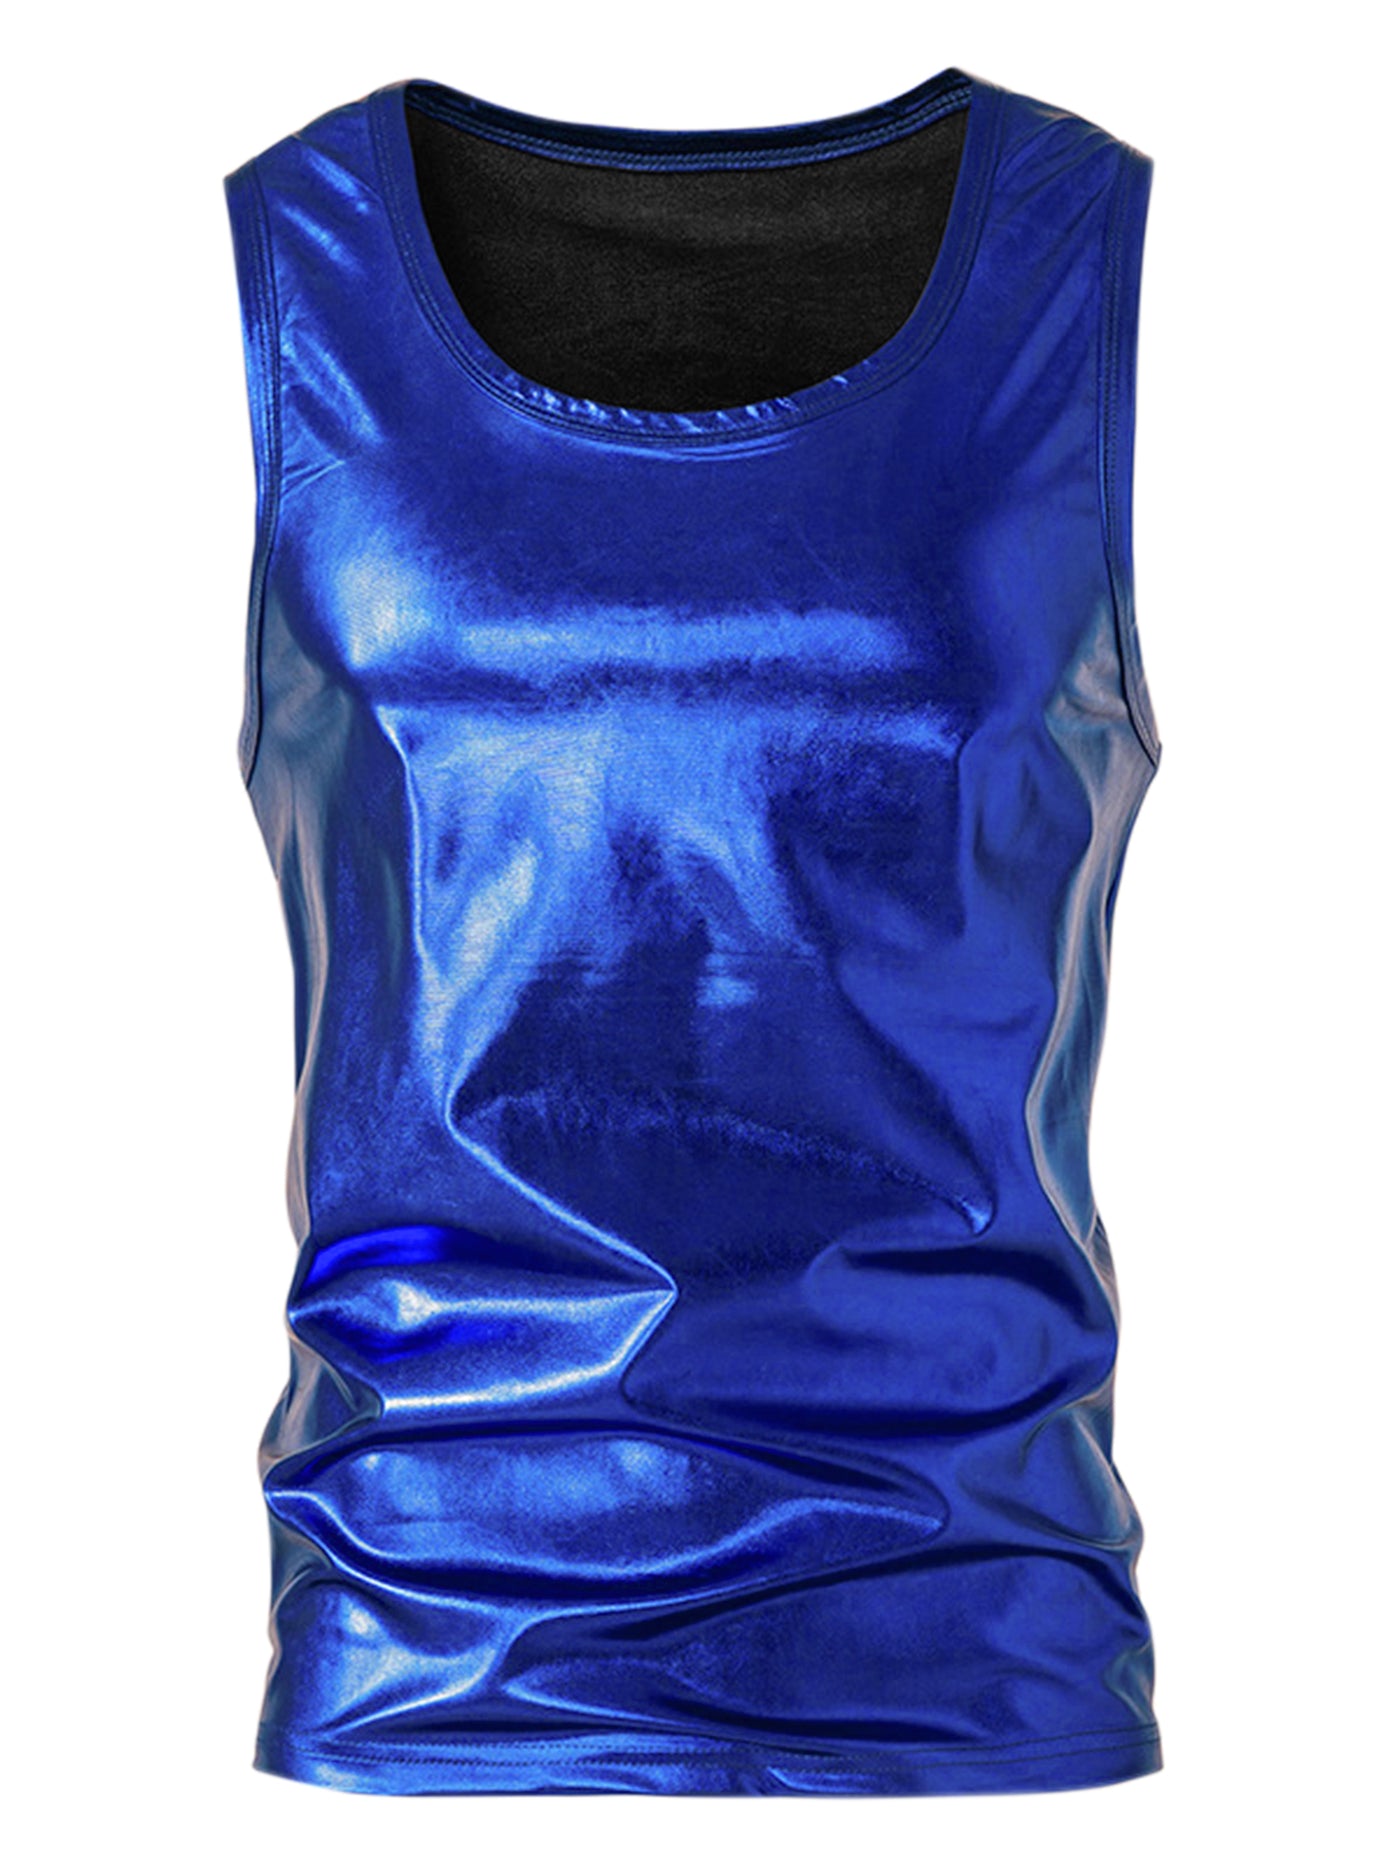 Bublédon Metallic Tank Top for Men's Round Neck Shiny Disco Party Sleeveless T-Shirt Vest